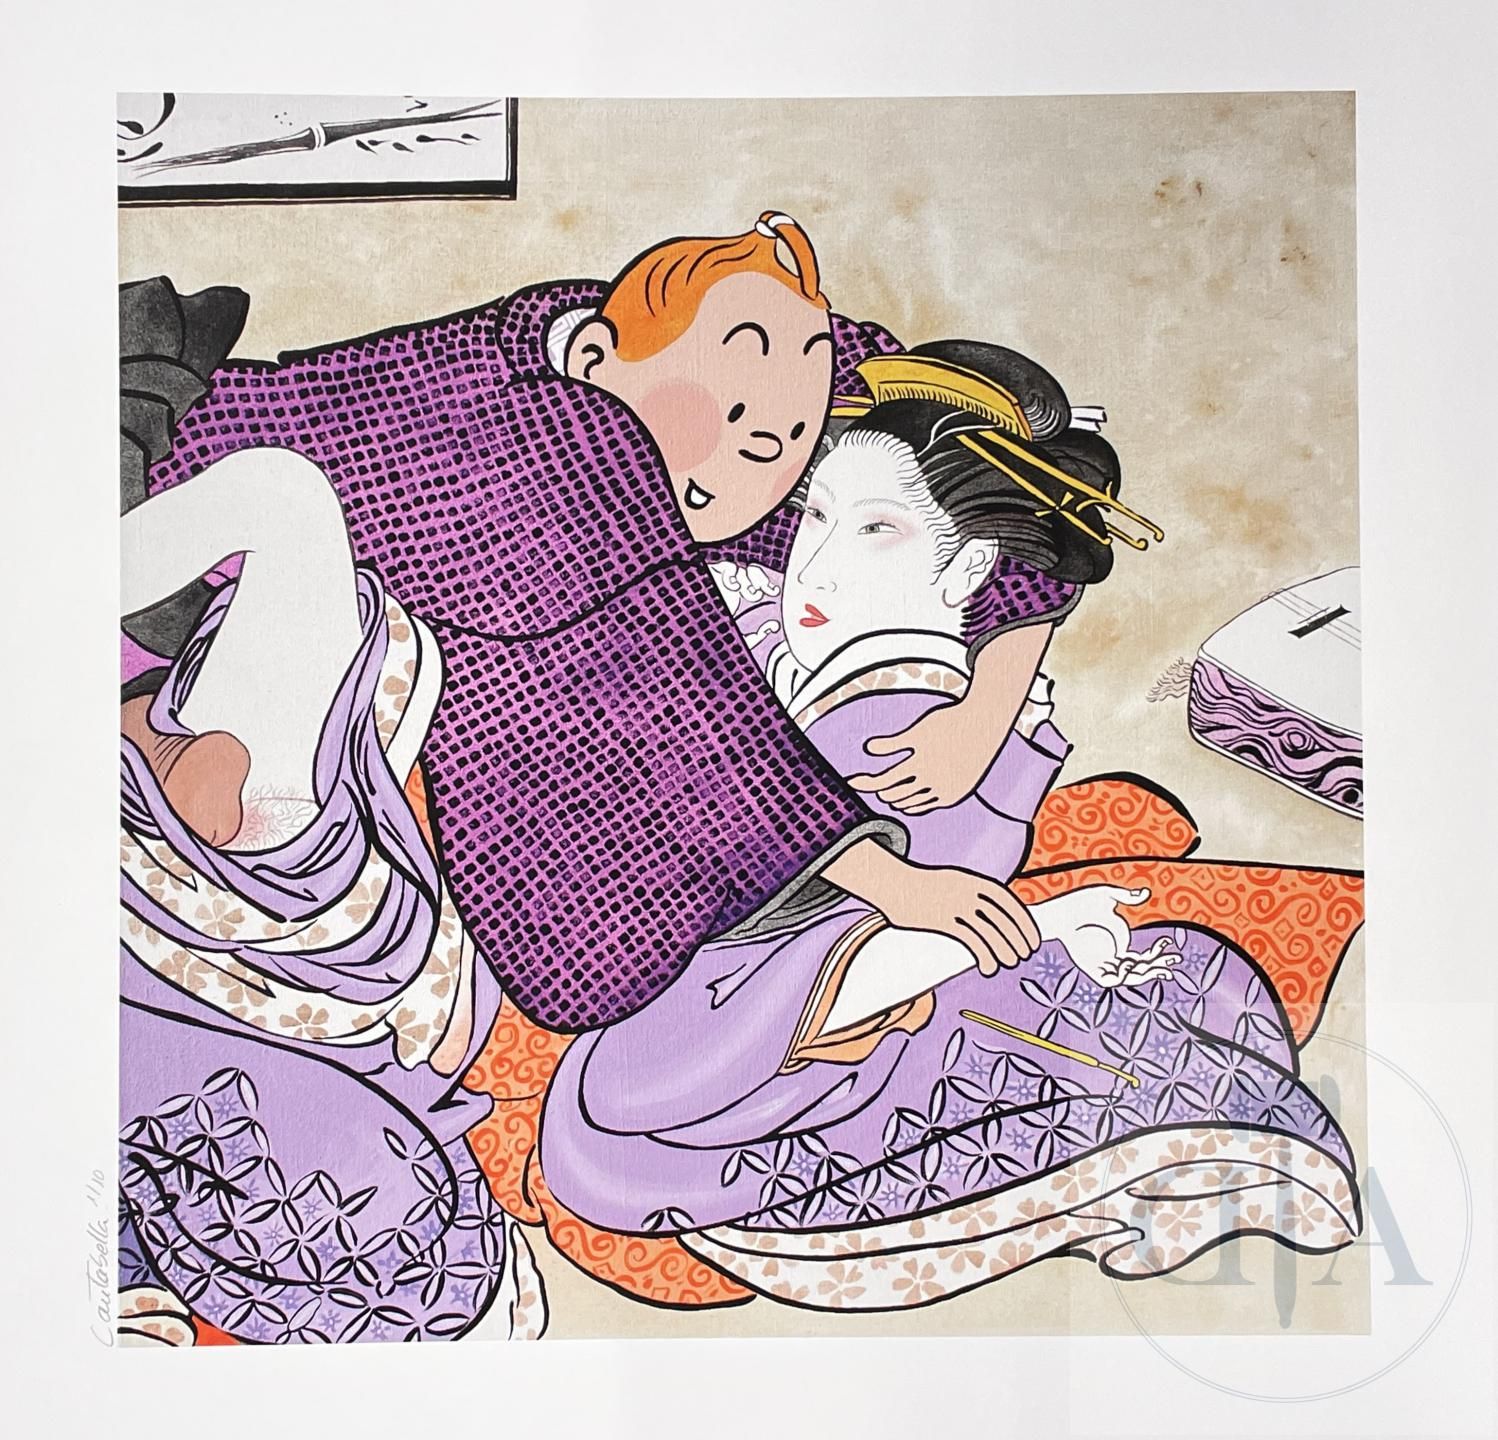 Tintin Hergé Cantabella Carmen/Shunga illustrating Tintin and a Japanese woman. &hellip;